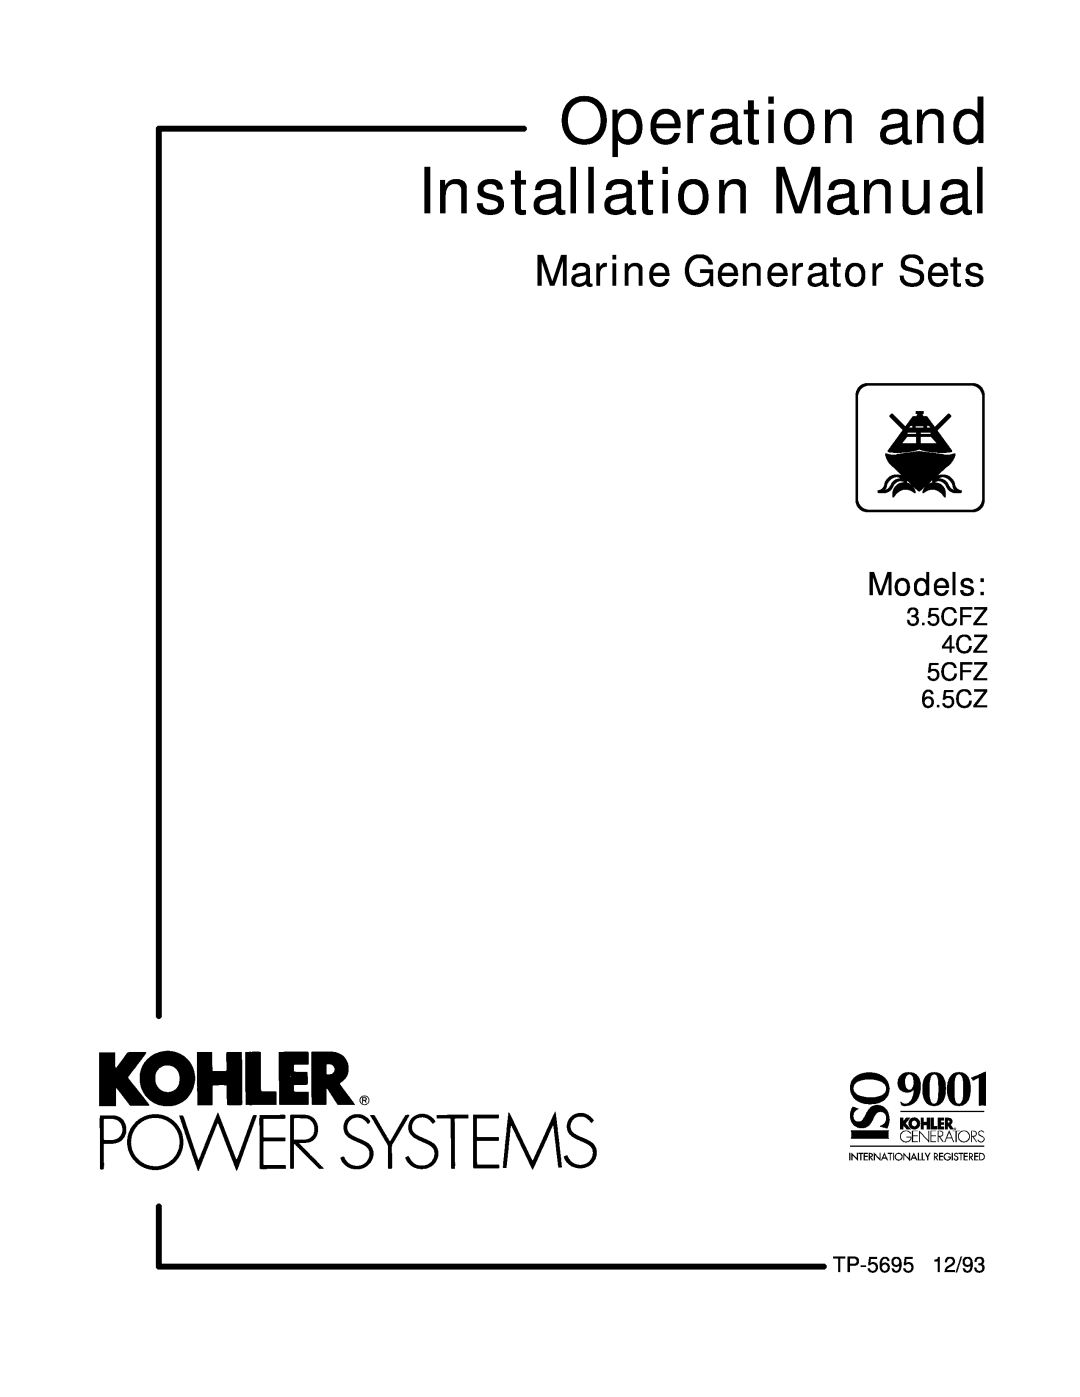 Kohler 3.5CFZ, 4CZ, 5CFZ, 6.5CZ installation manual Marine Generator Sets, Models, 3.5CFZ 4CZ 5CFZ 6.5CZ, TP-5695 12/93 